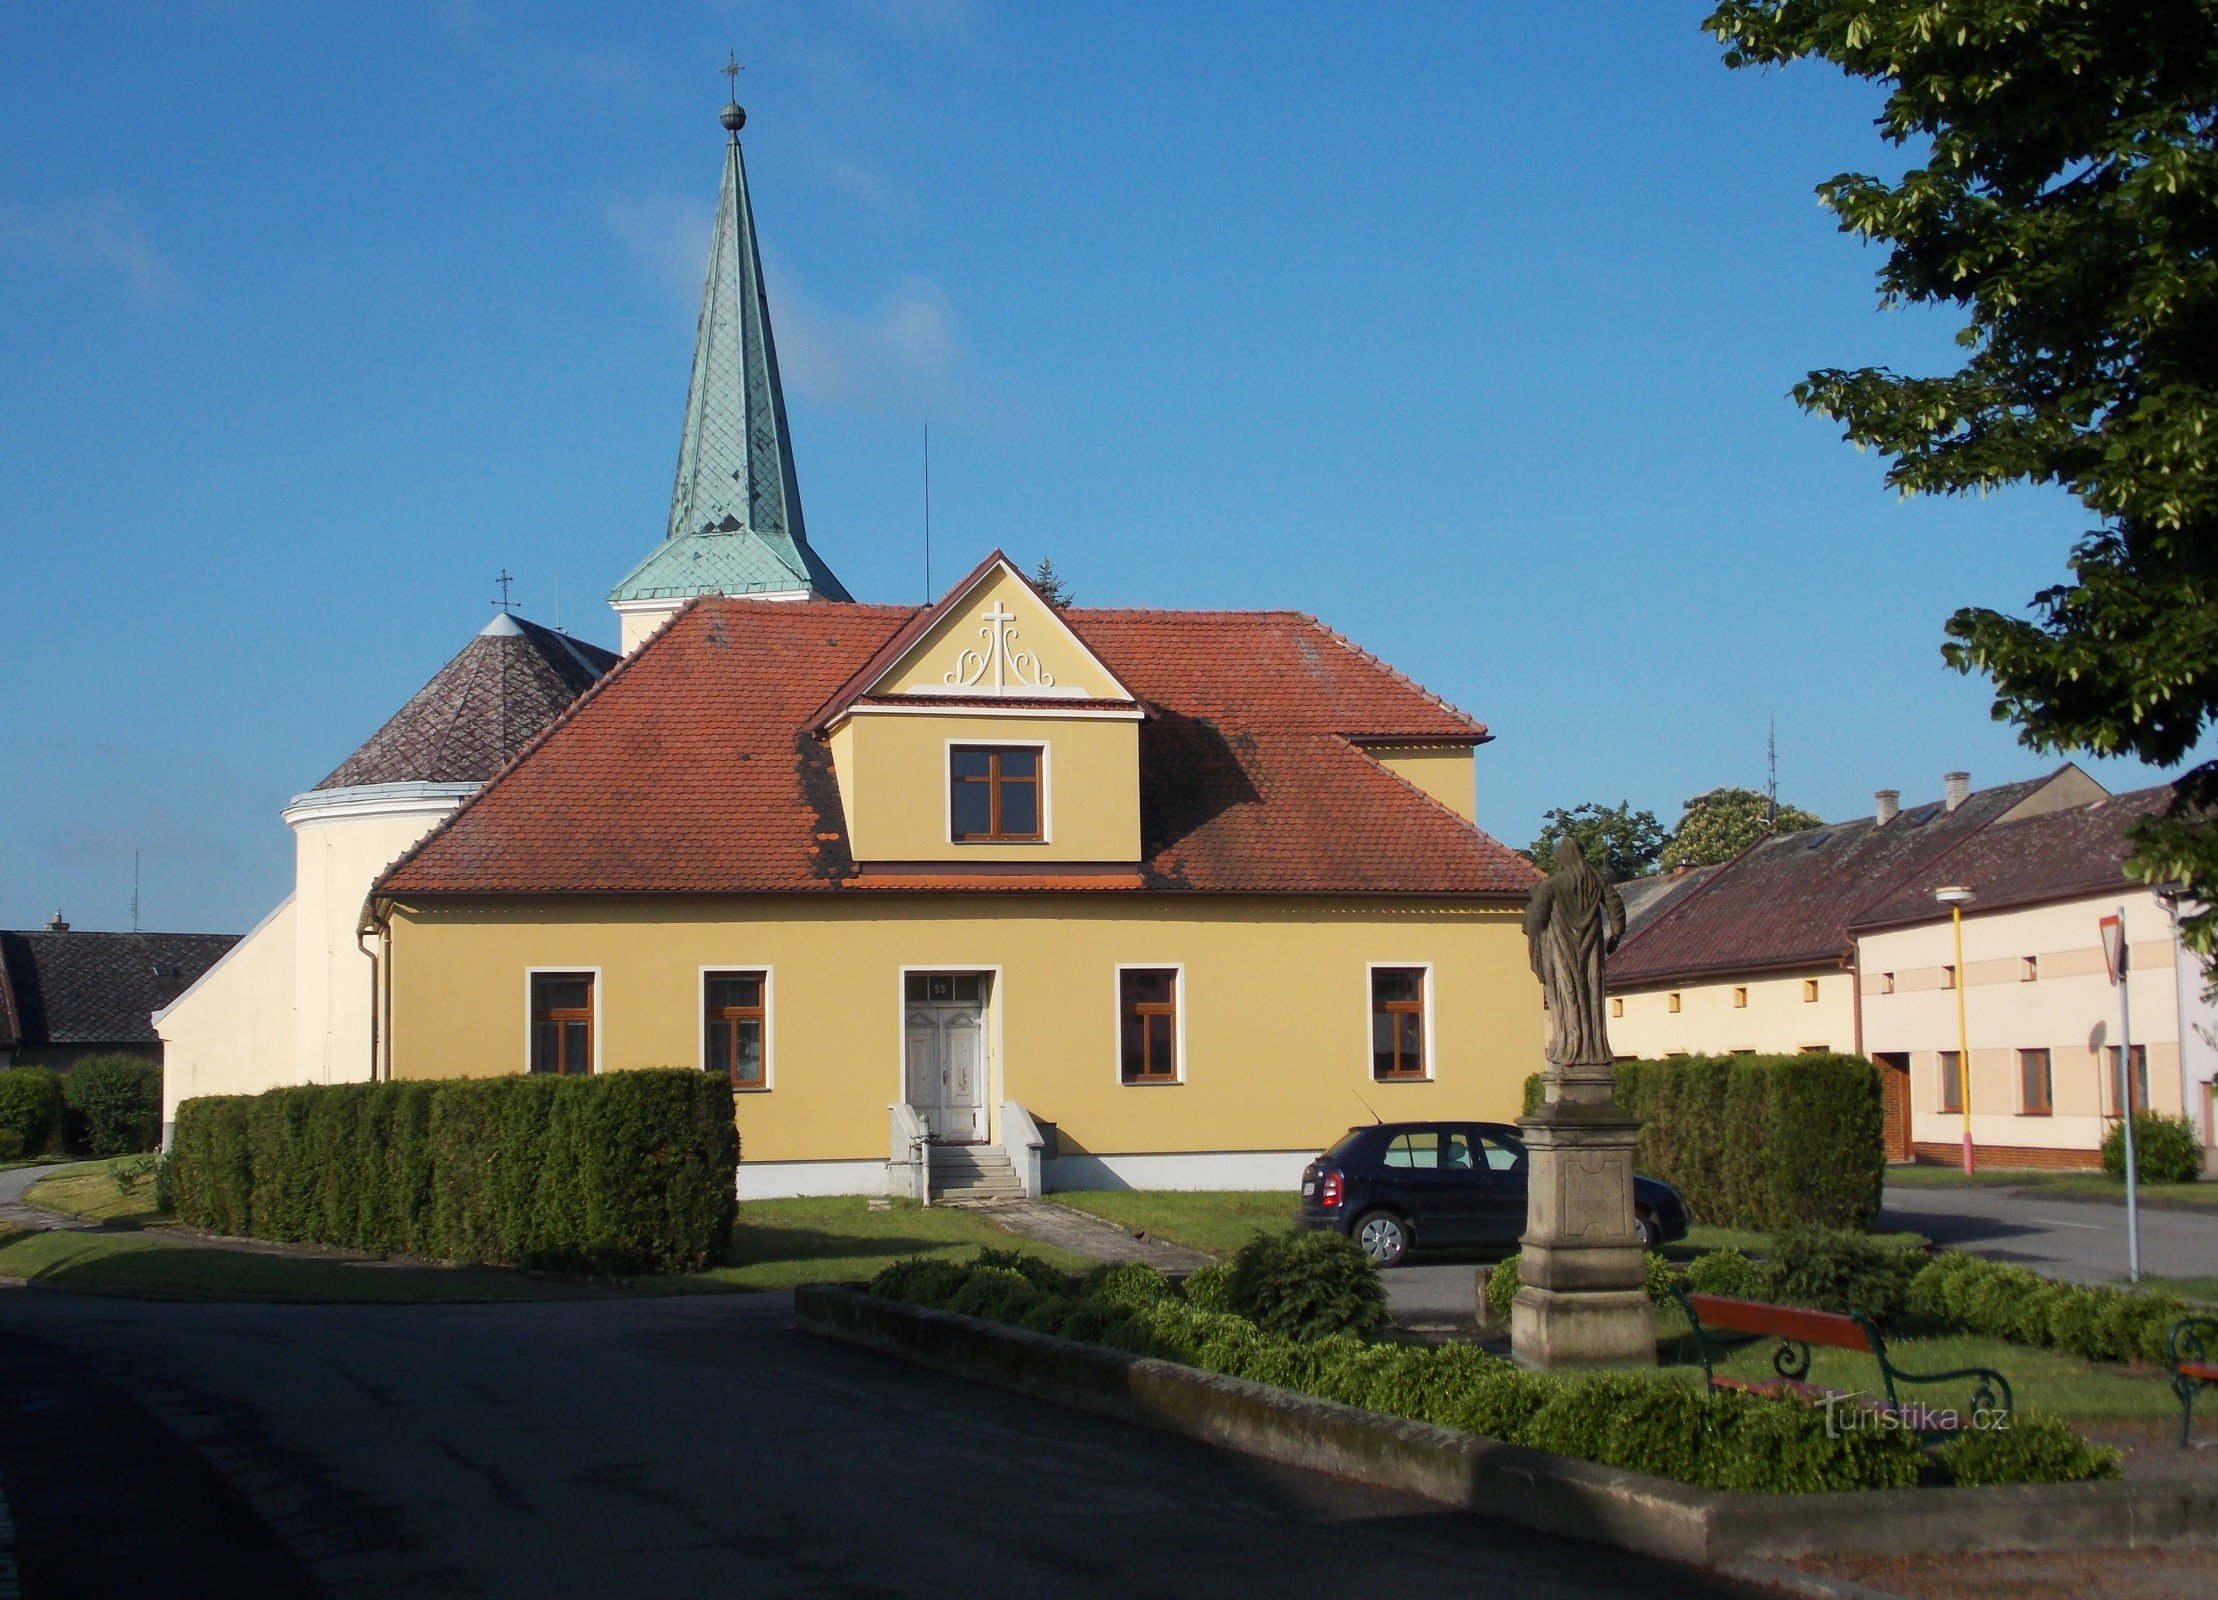 Церковь св. Варфоломей